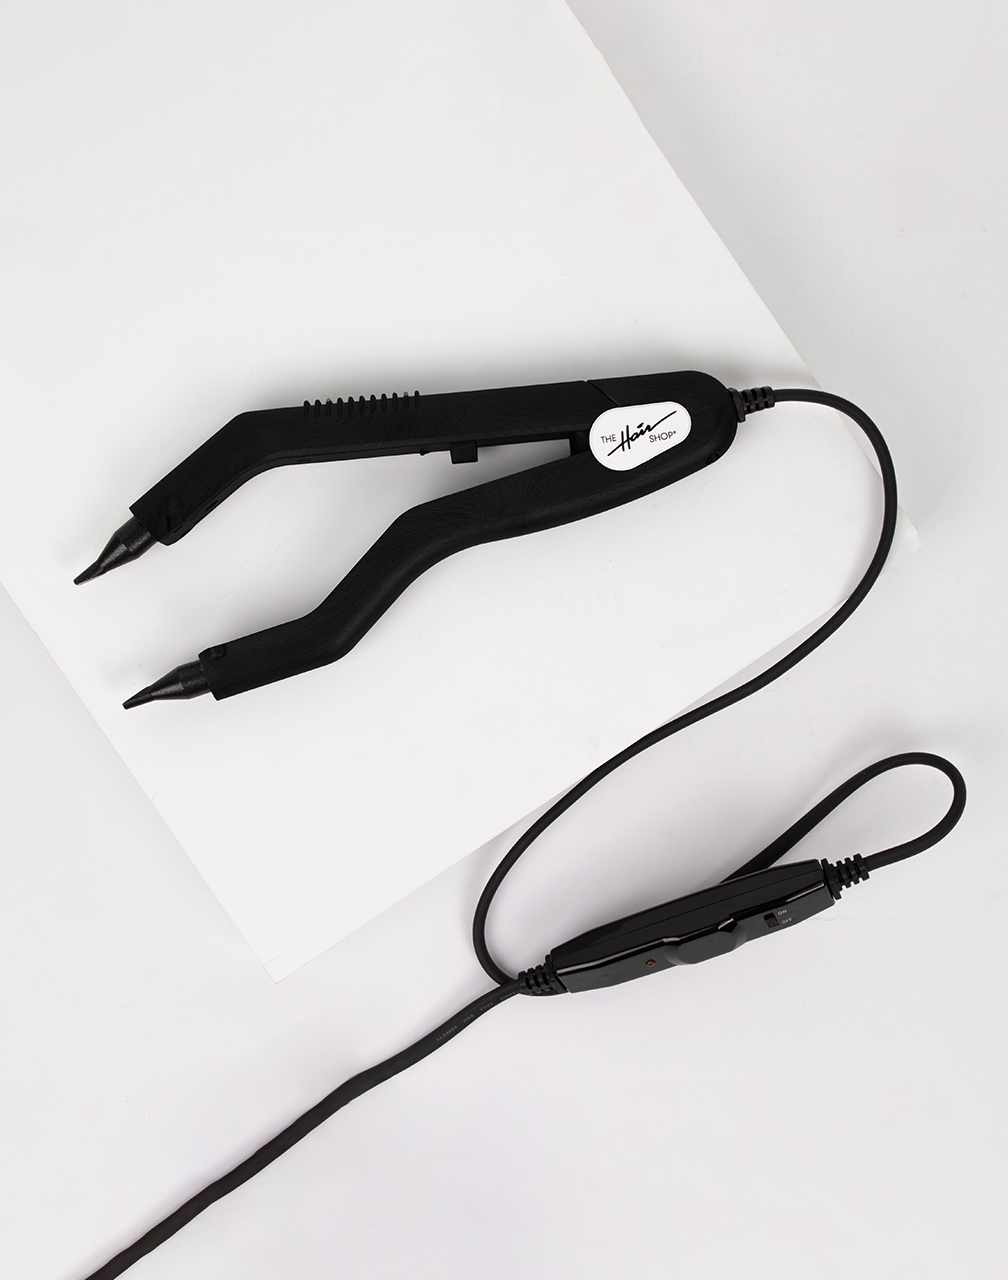 X-10 Pro Loop Needle - Hair Extension Tools